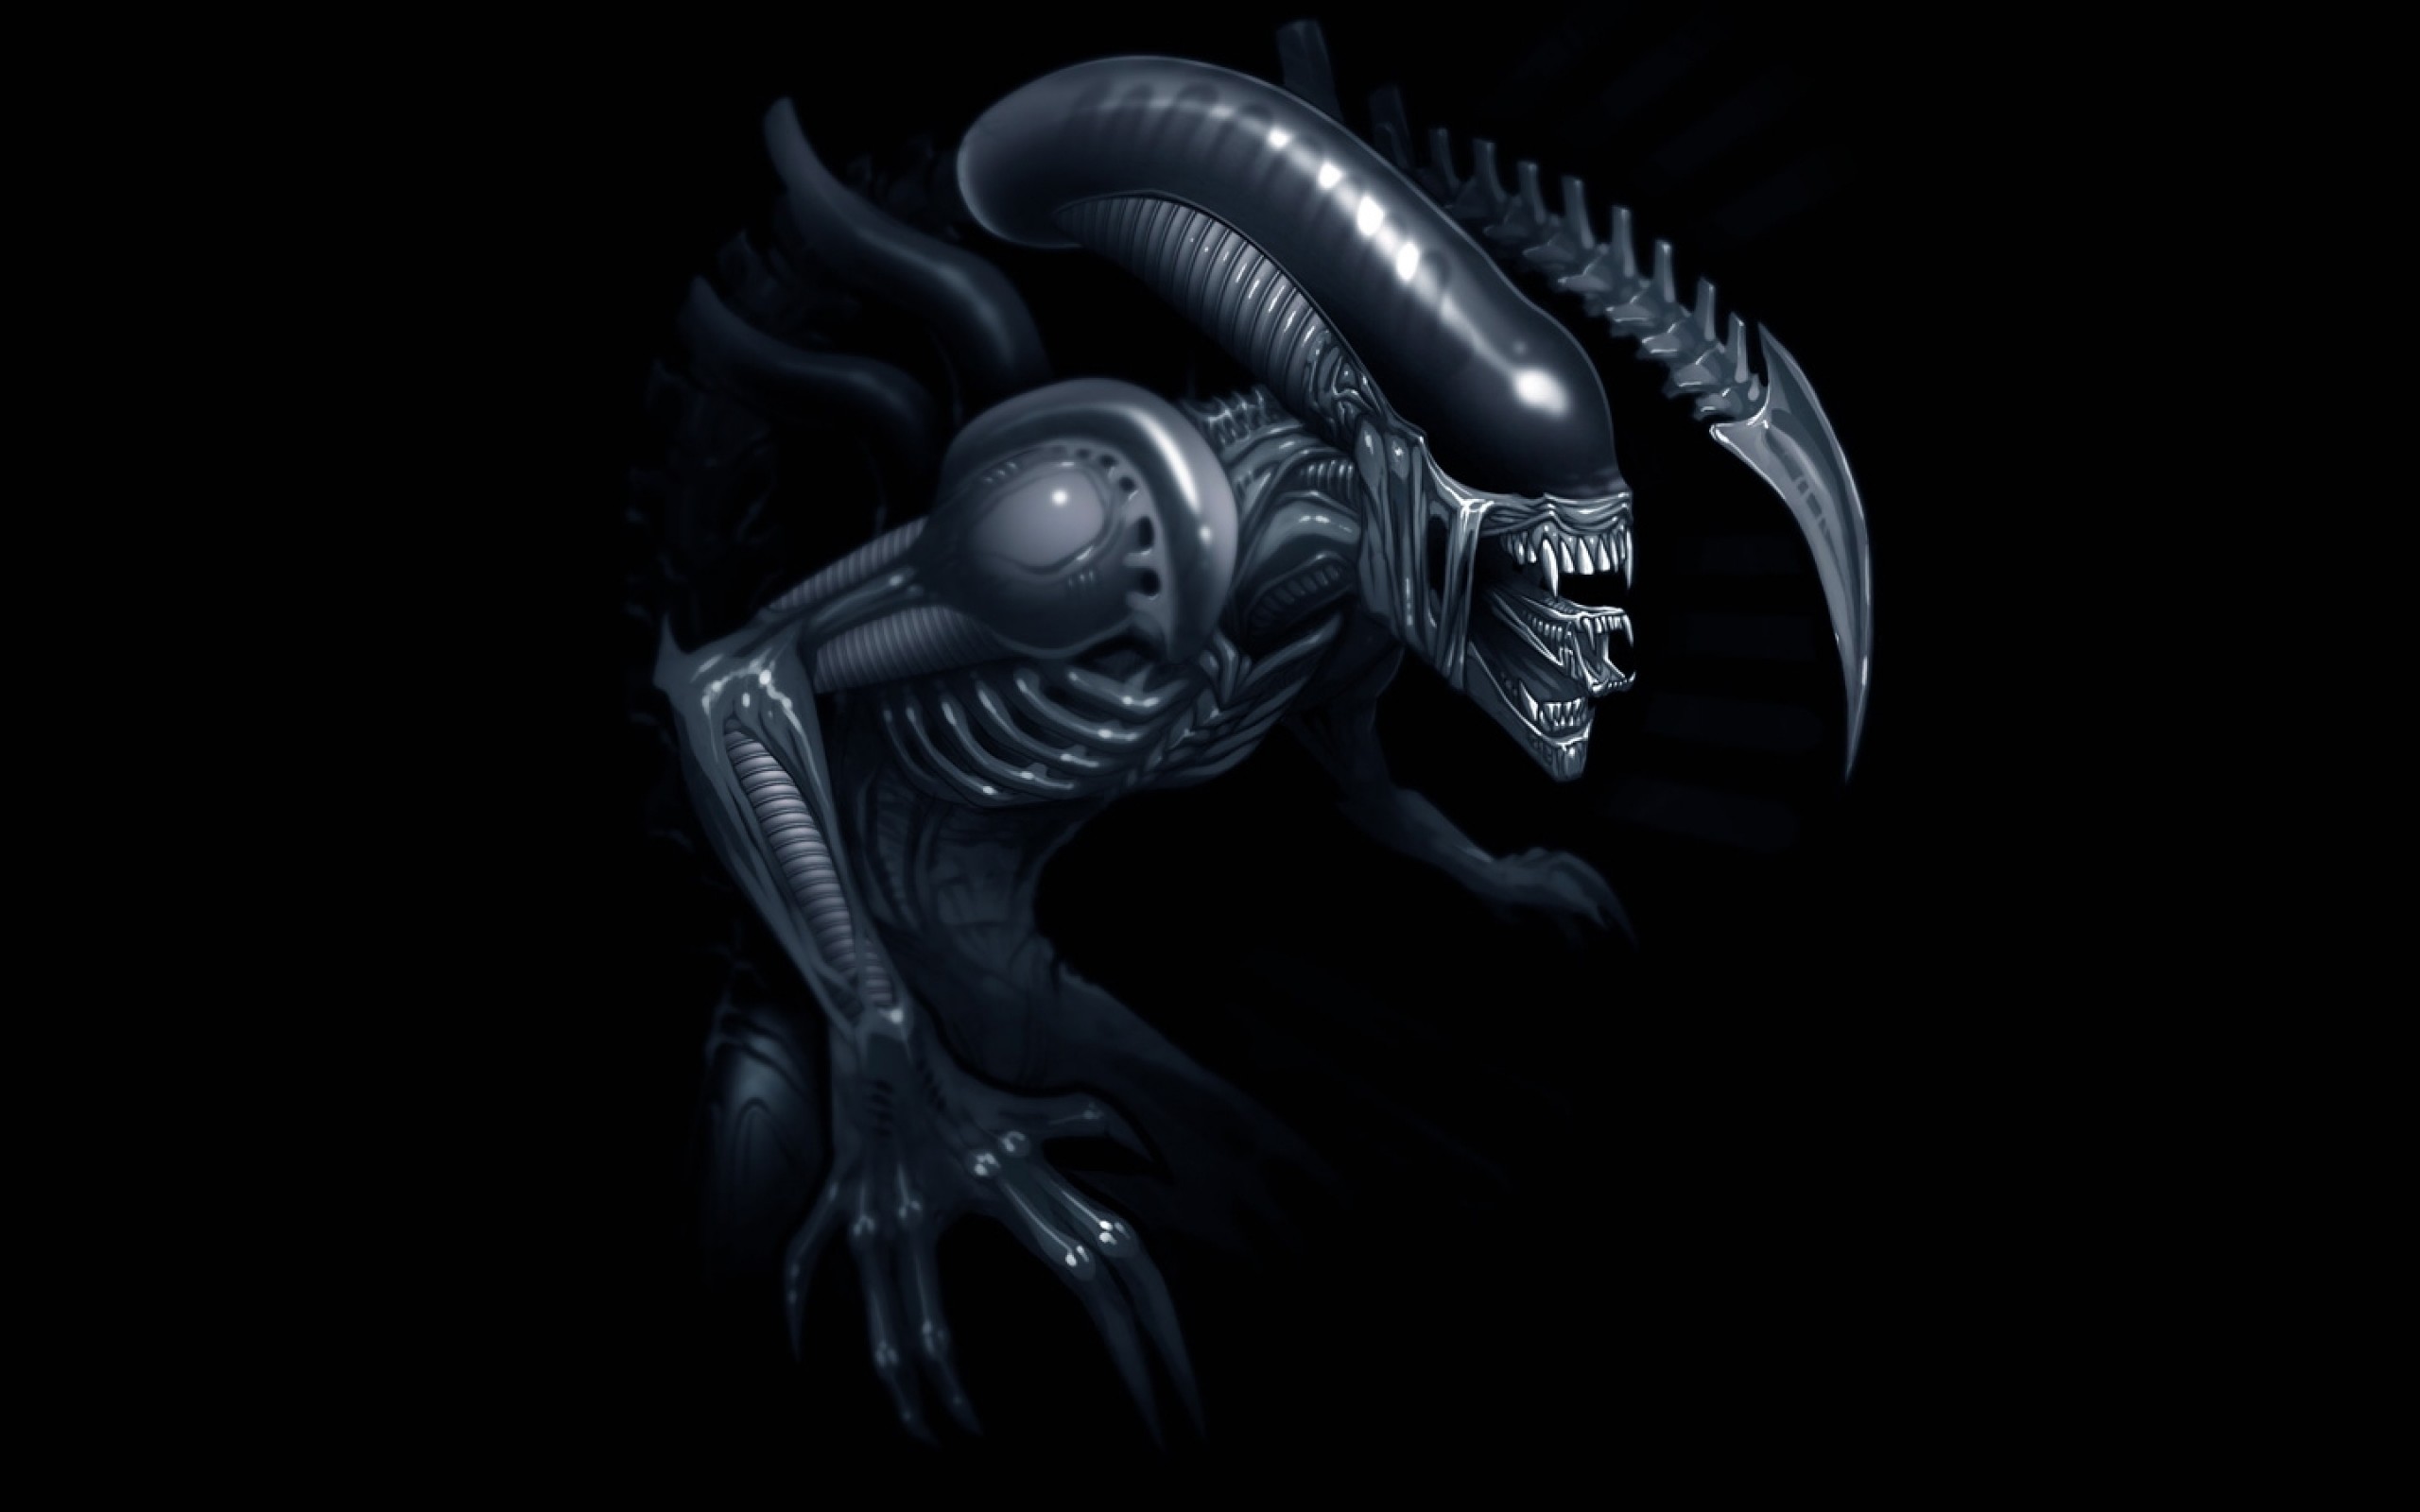 Hr giger aliens movie 1440×900 wallpaper Art HD Wallpaper